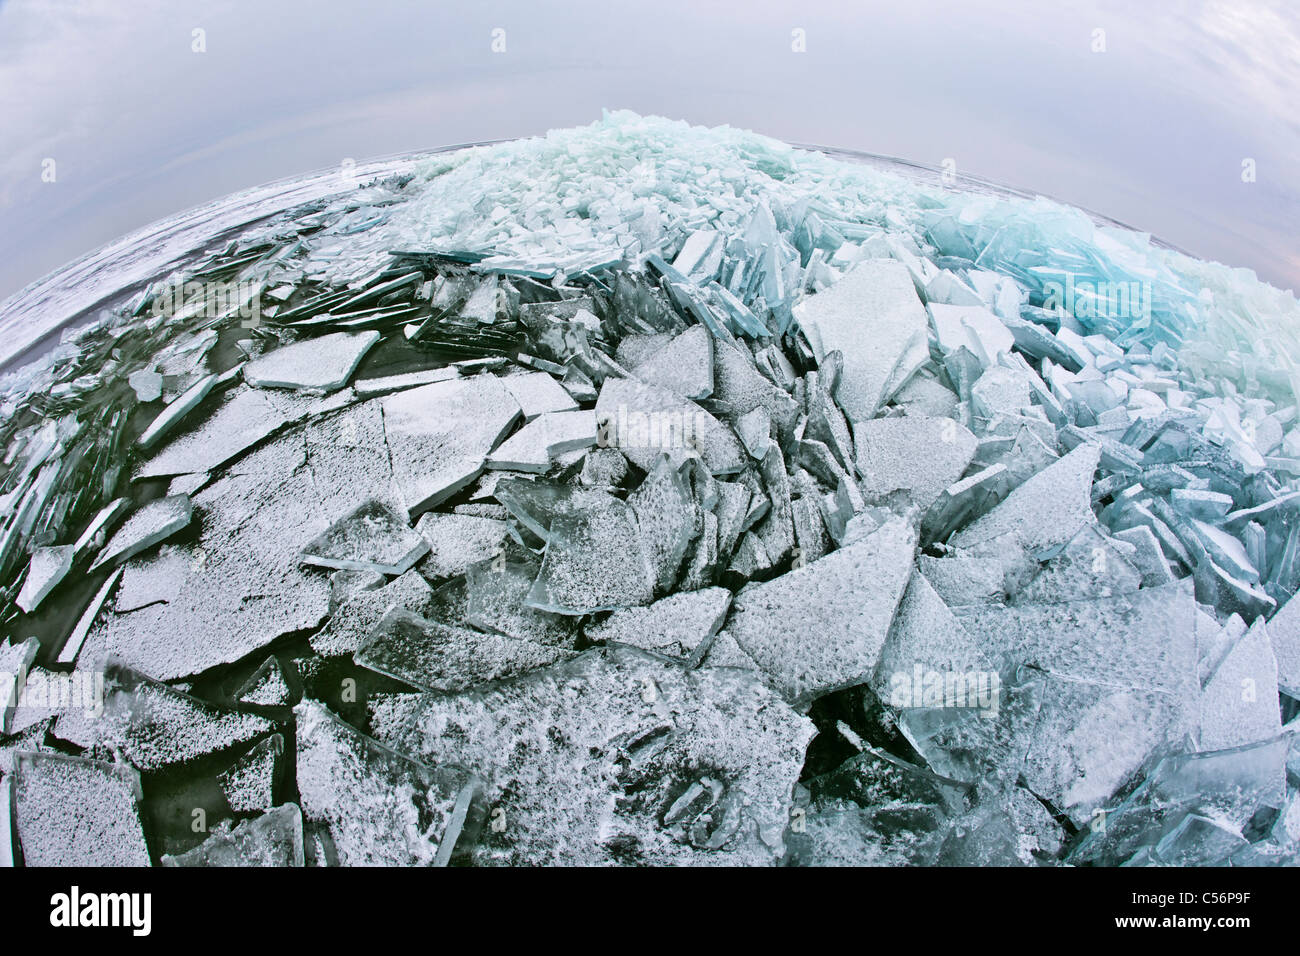 The Netherlands, Oosterleek, Piled up ice on frozen lake called Markermeer. Fisheye lens. Stock Photo